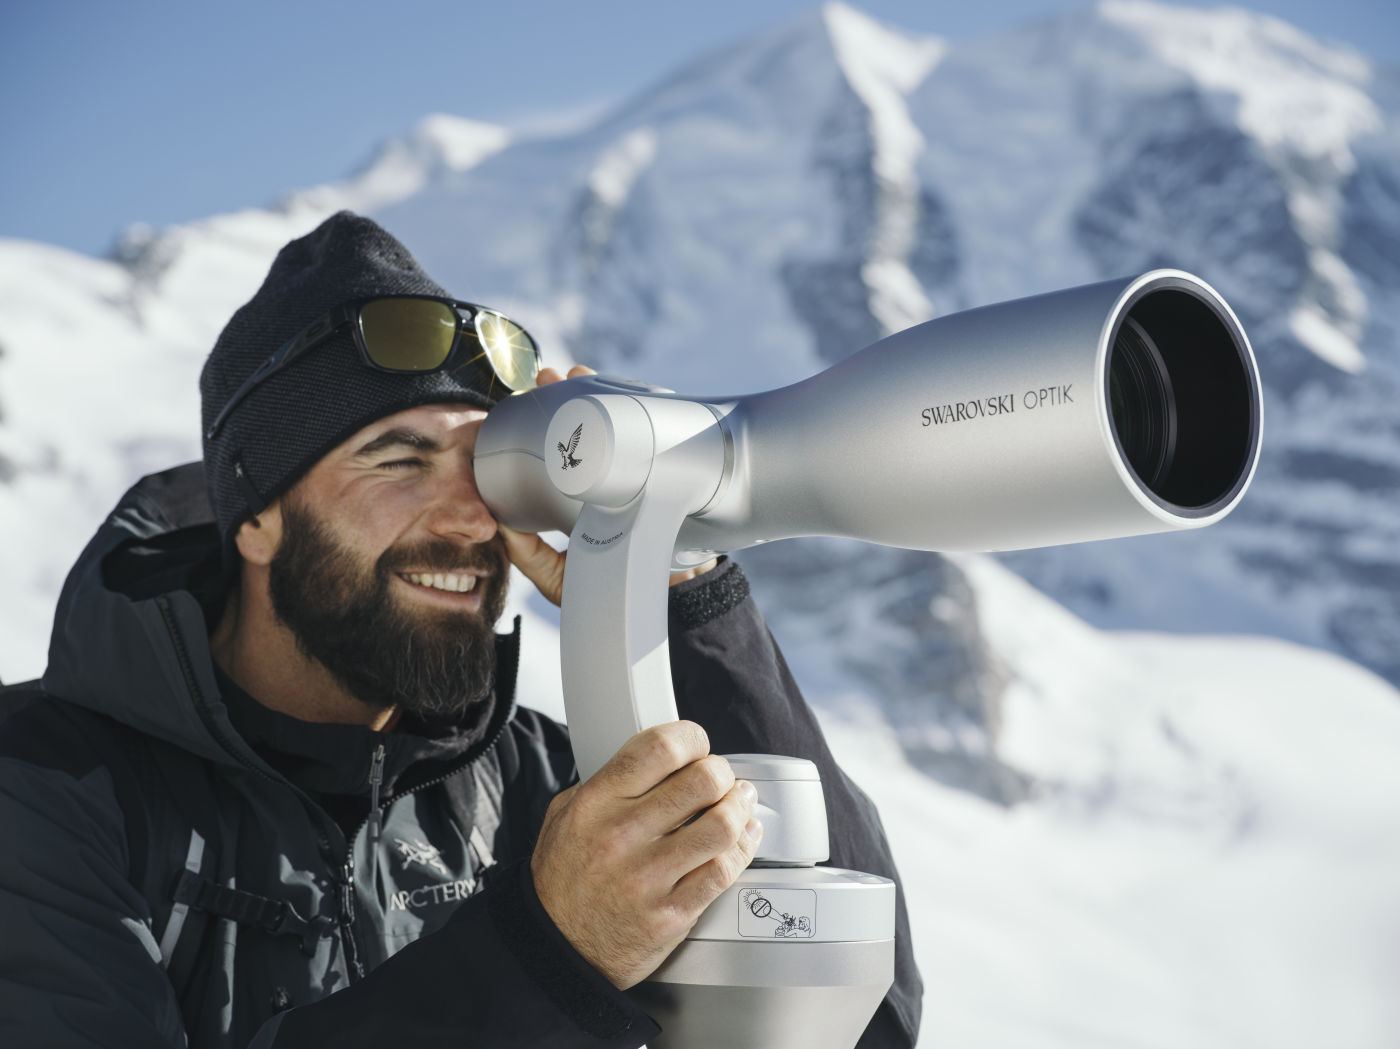 ST Vista spotting scope at Diavolezza in Switzerland, man looking through the spotting scope, ID 1279193